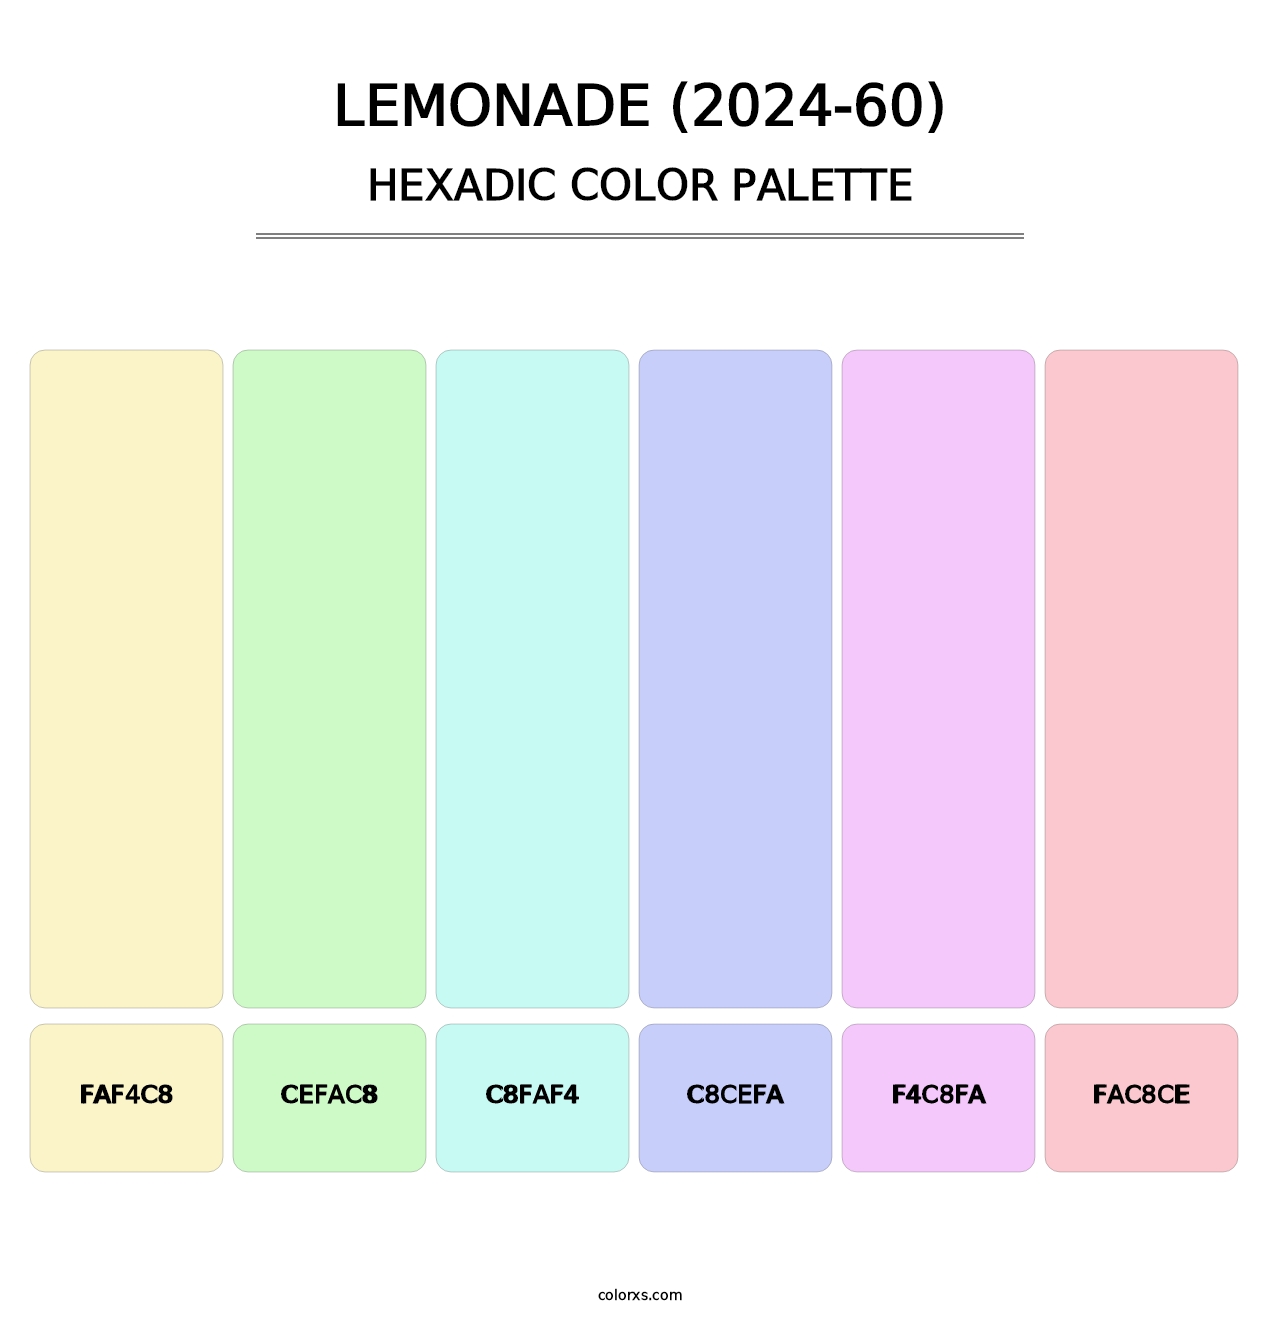 Lemonade (2024-60) - Hexadic Color Palette